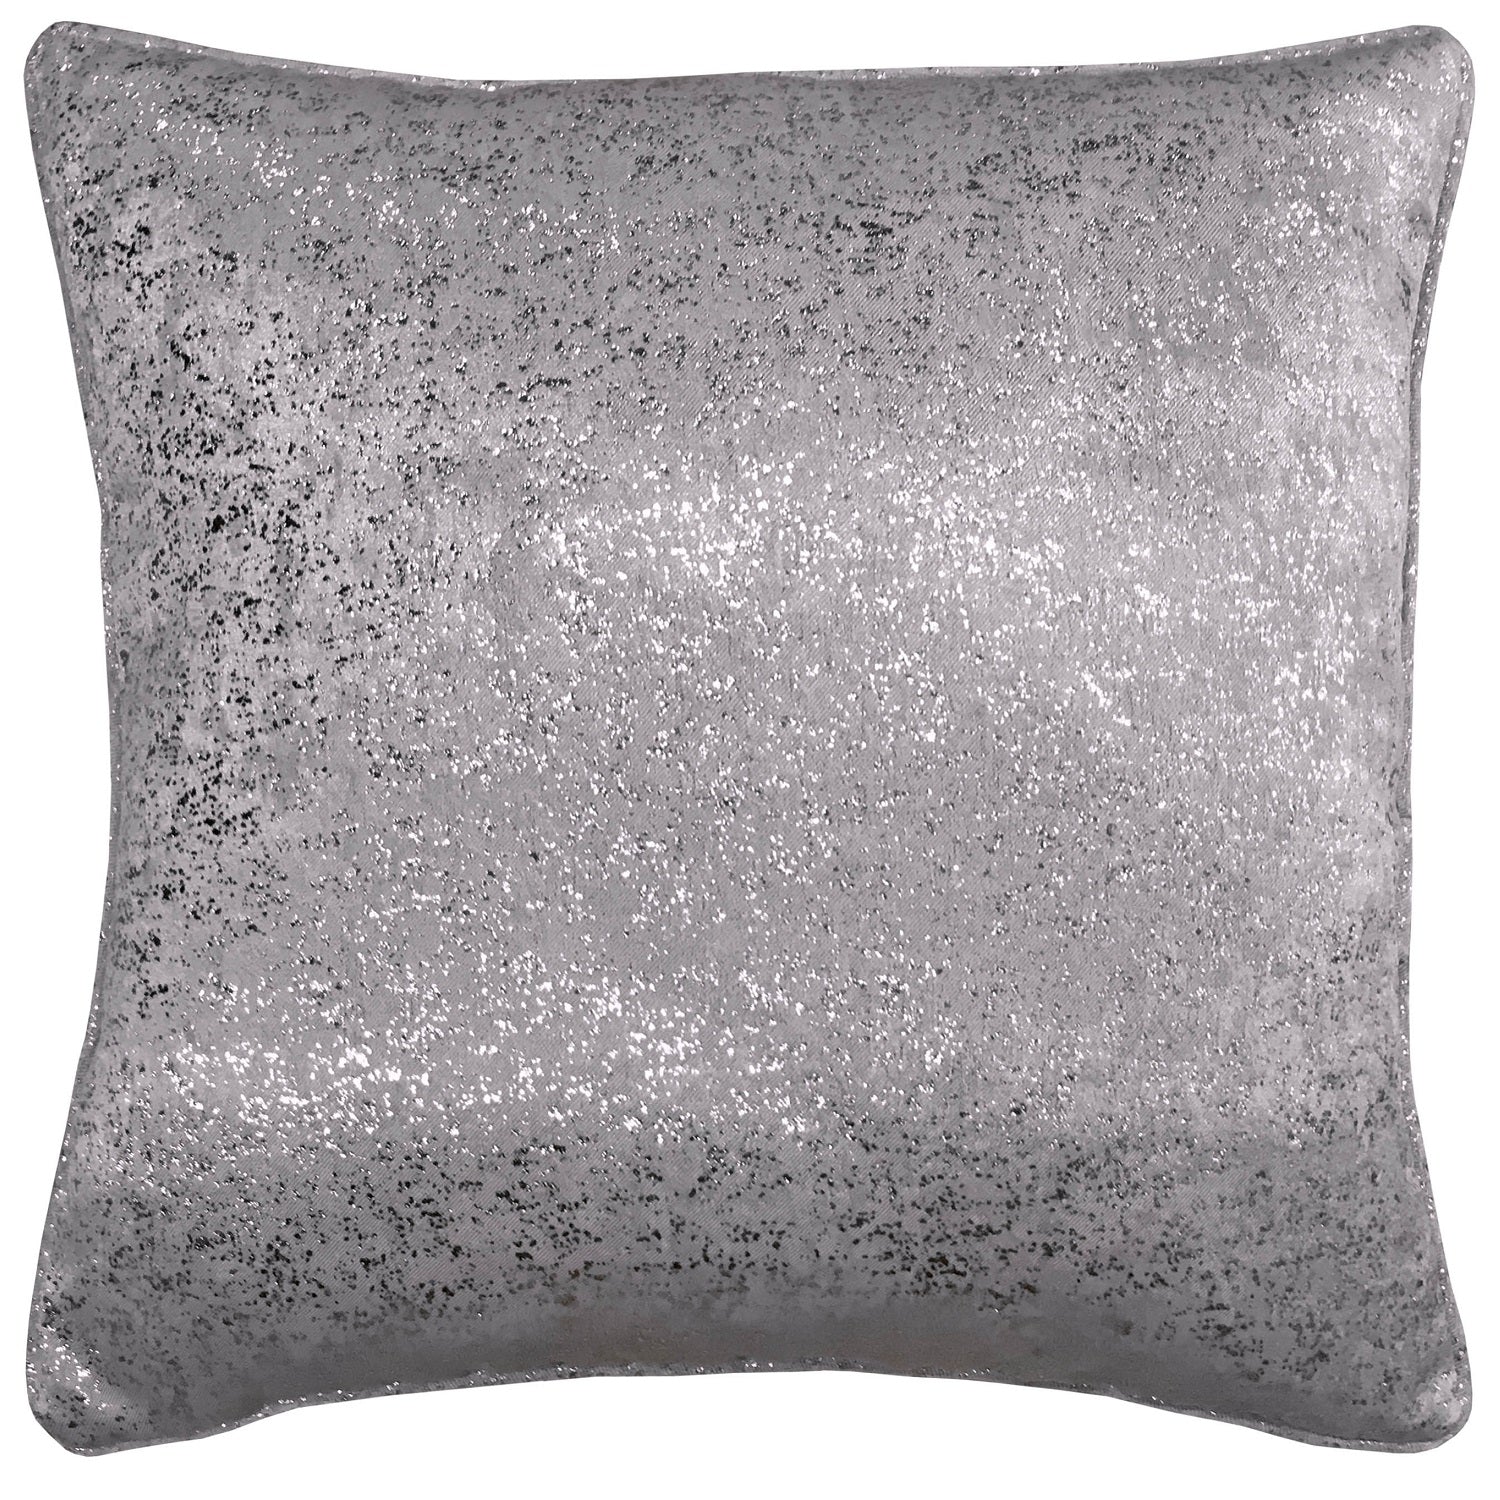 22" Silver Grey Glitter Sparkle Cushion Cover